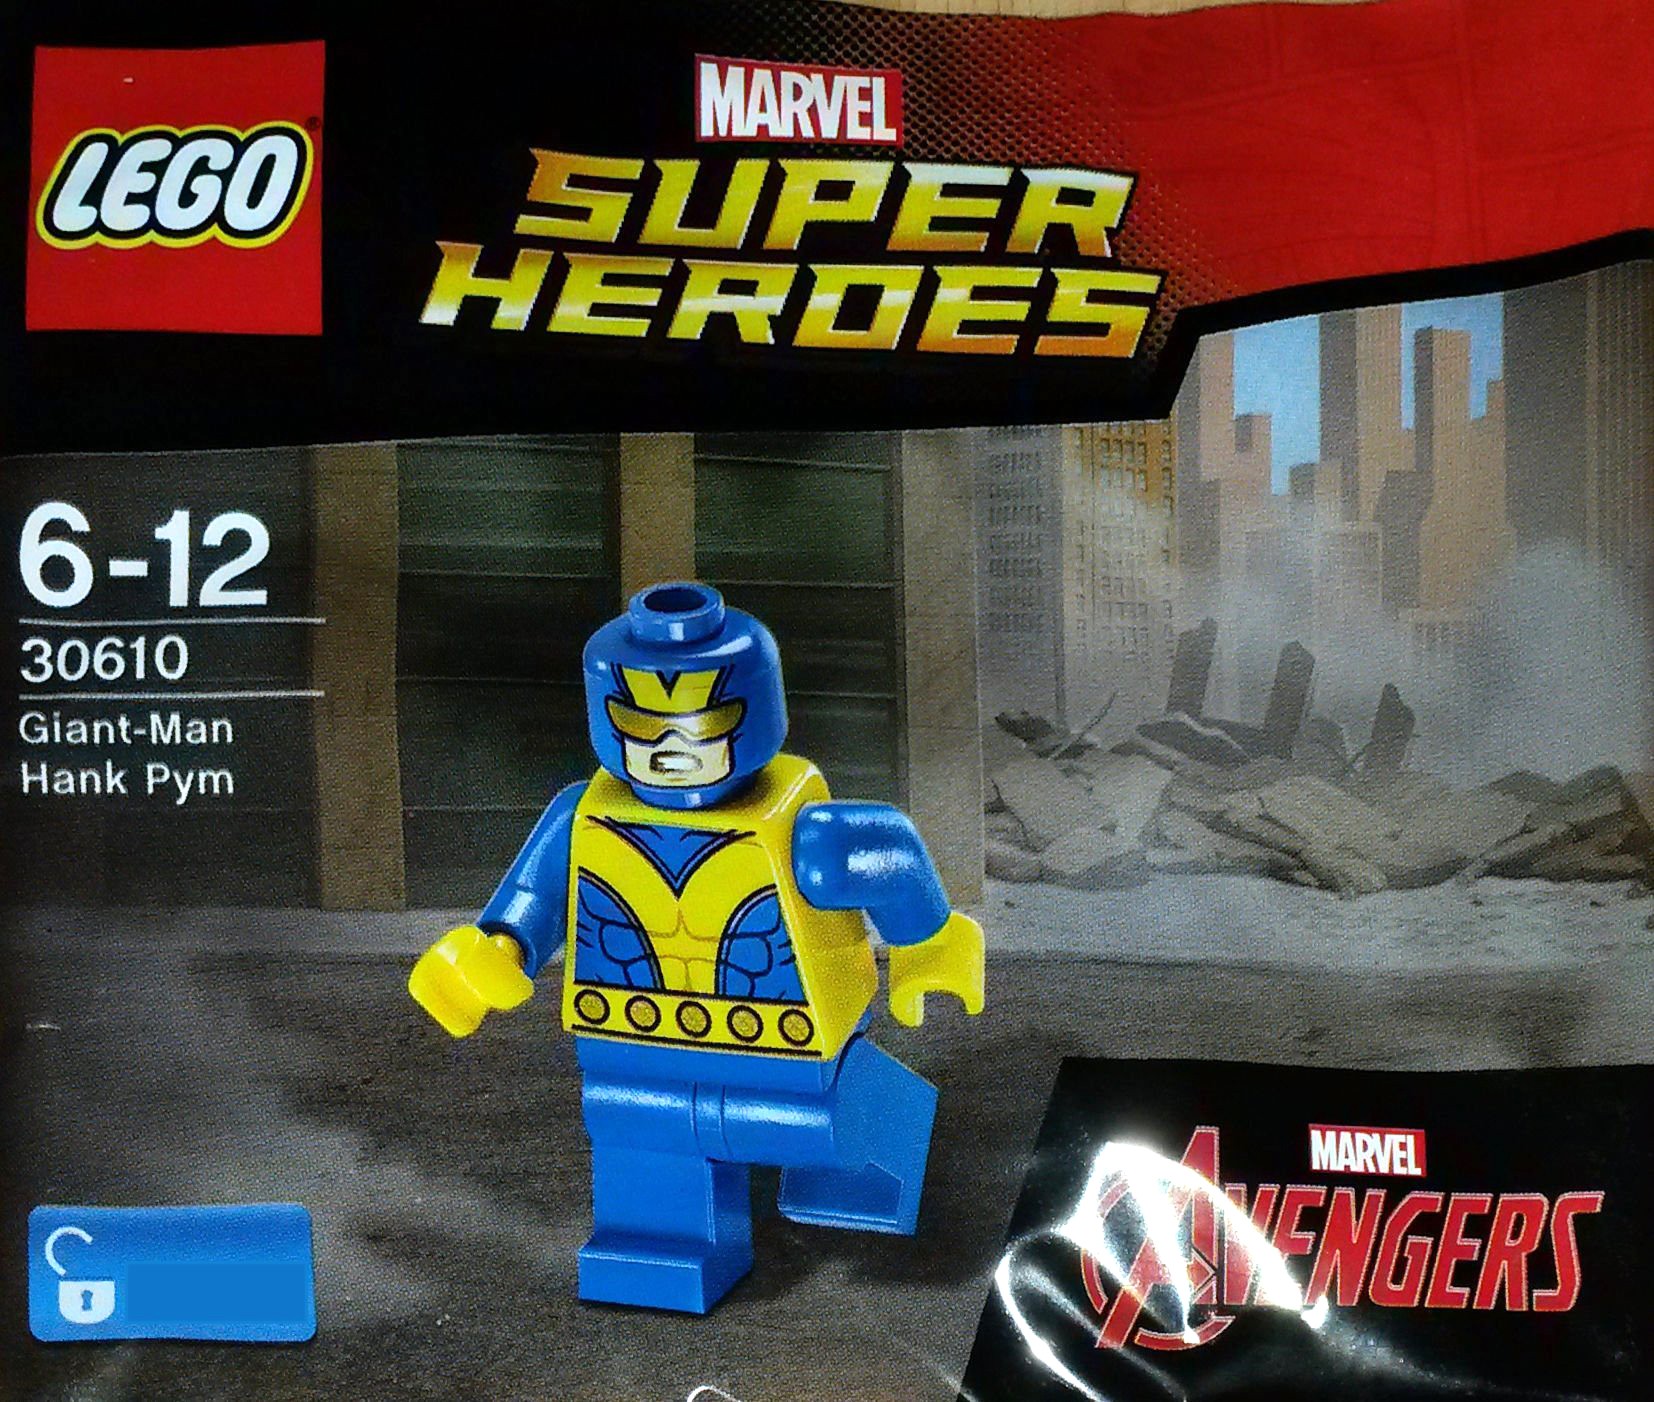 Marvel Super Heroes Brickset